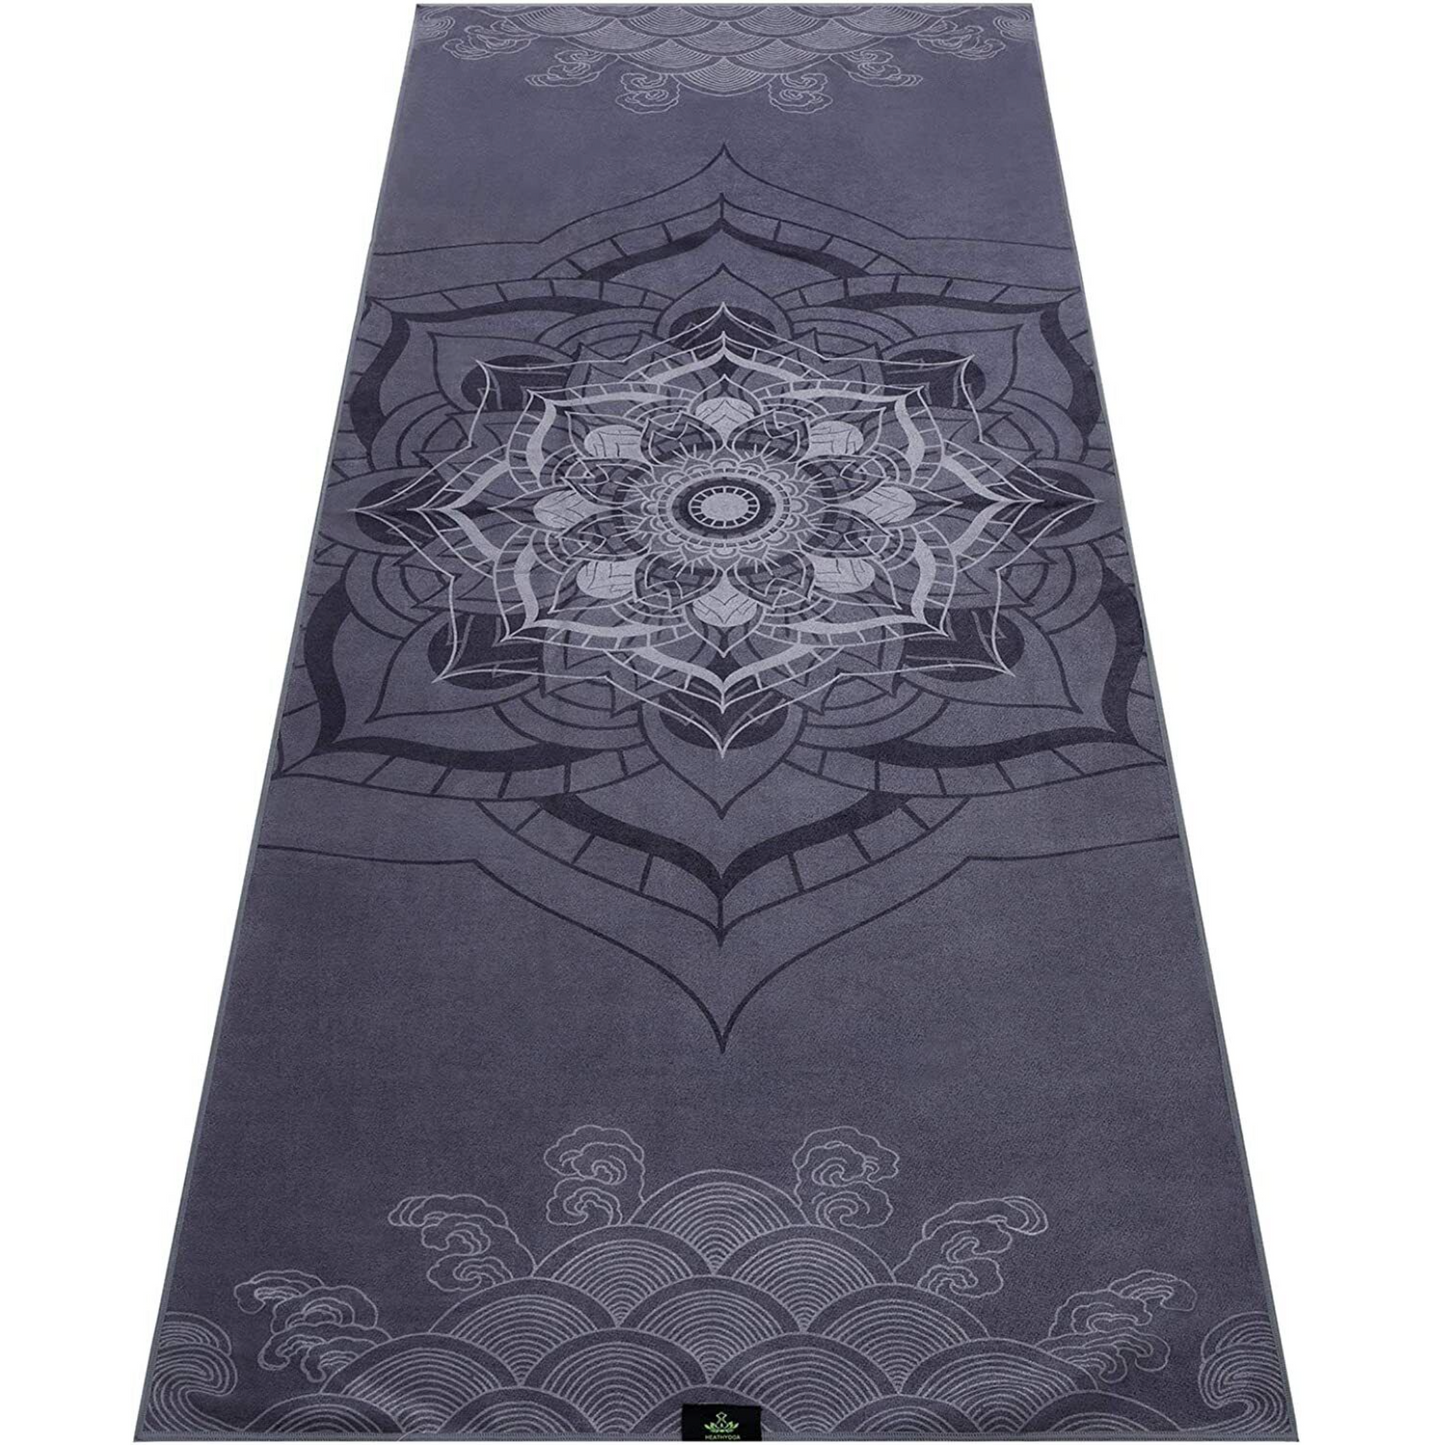 Microfiber Yoga Mat Towel Non Slip for Hot Yoga, Assorted Design